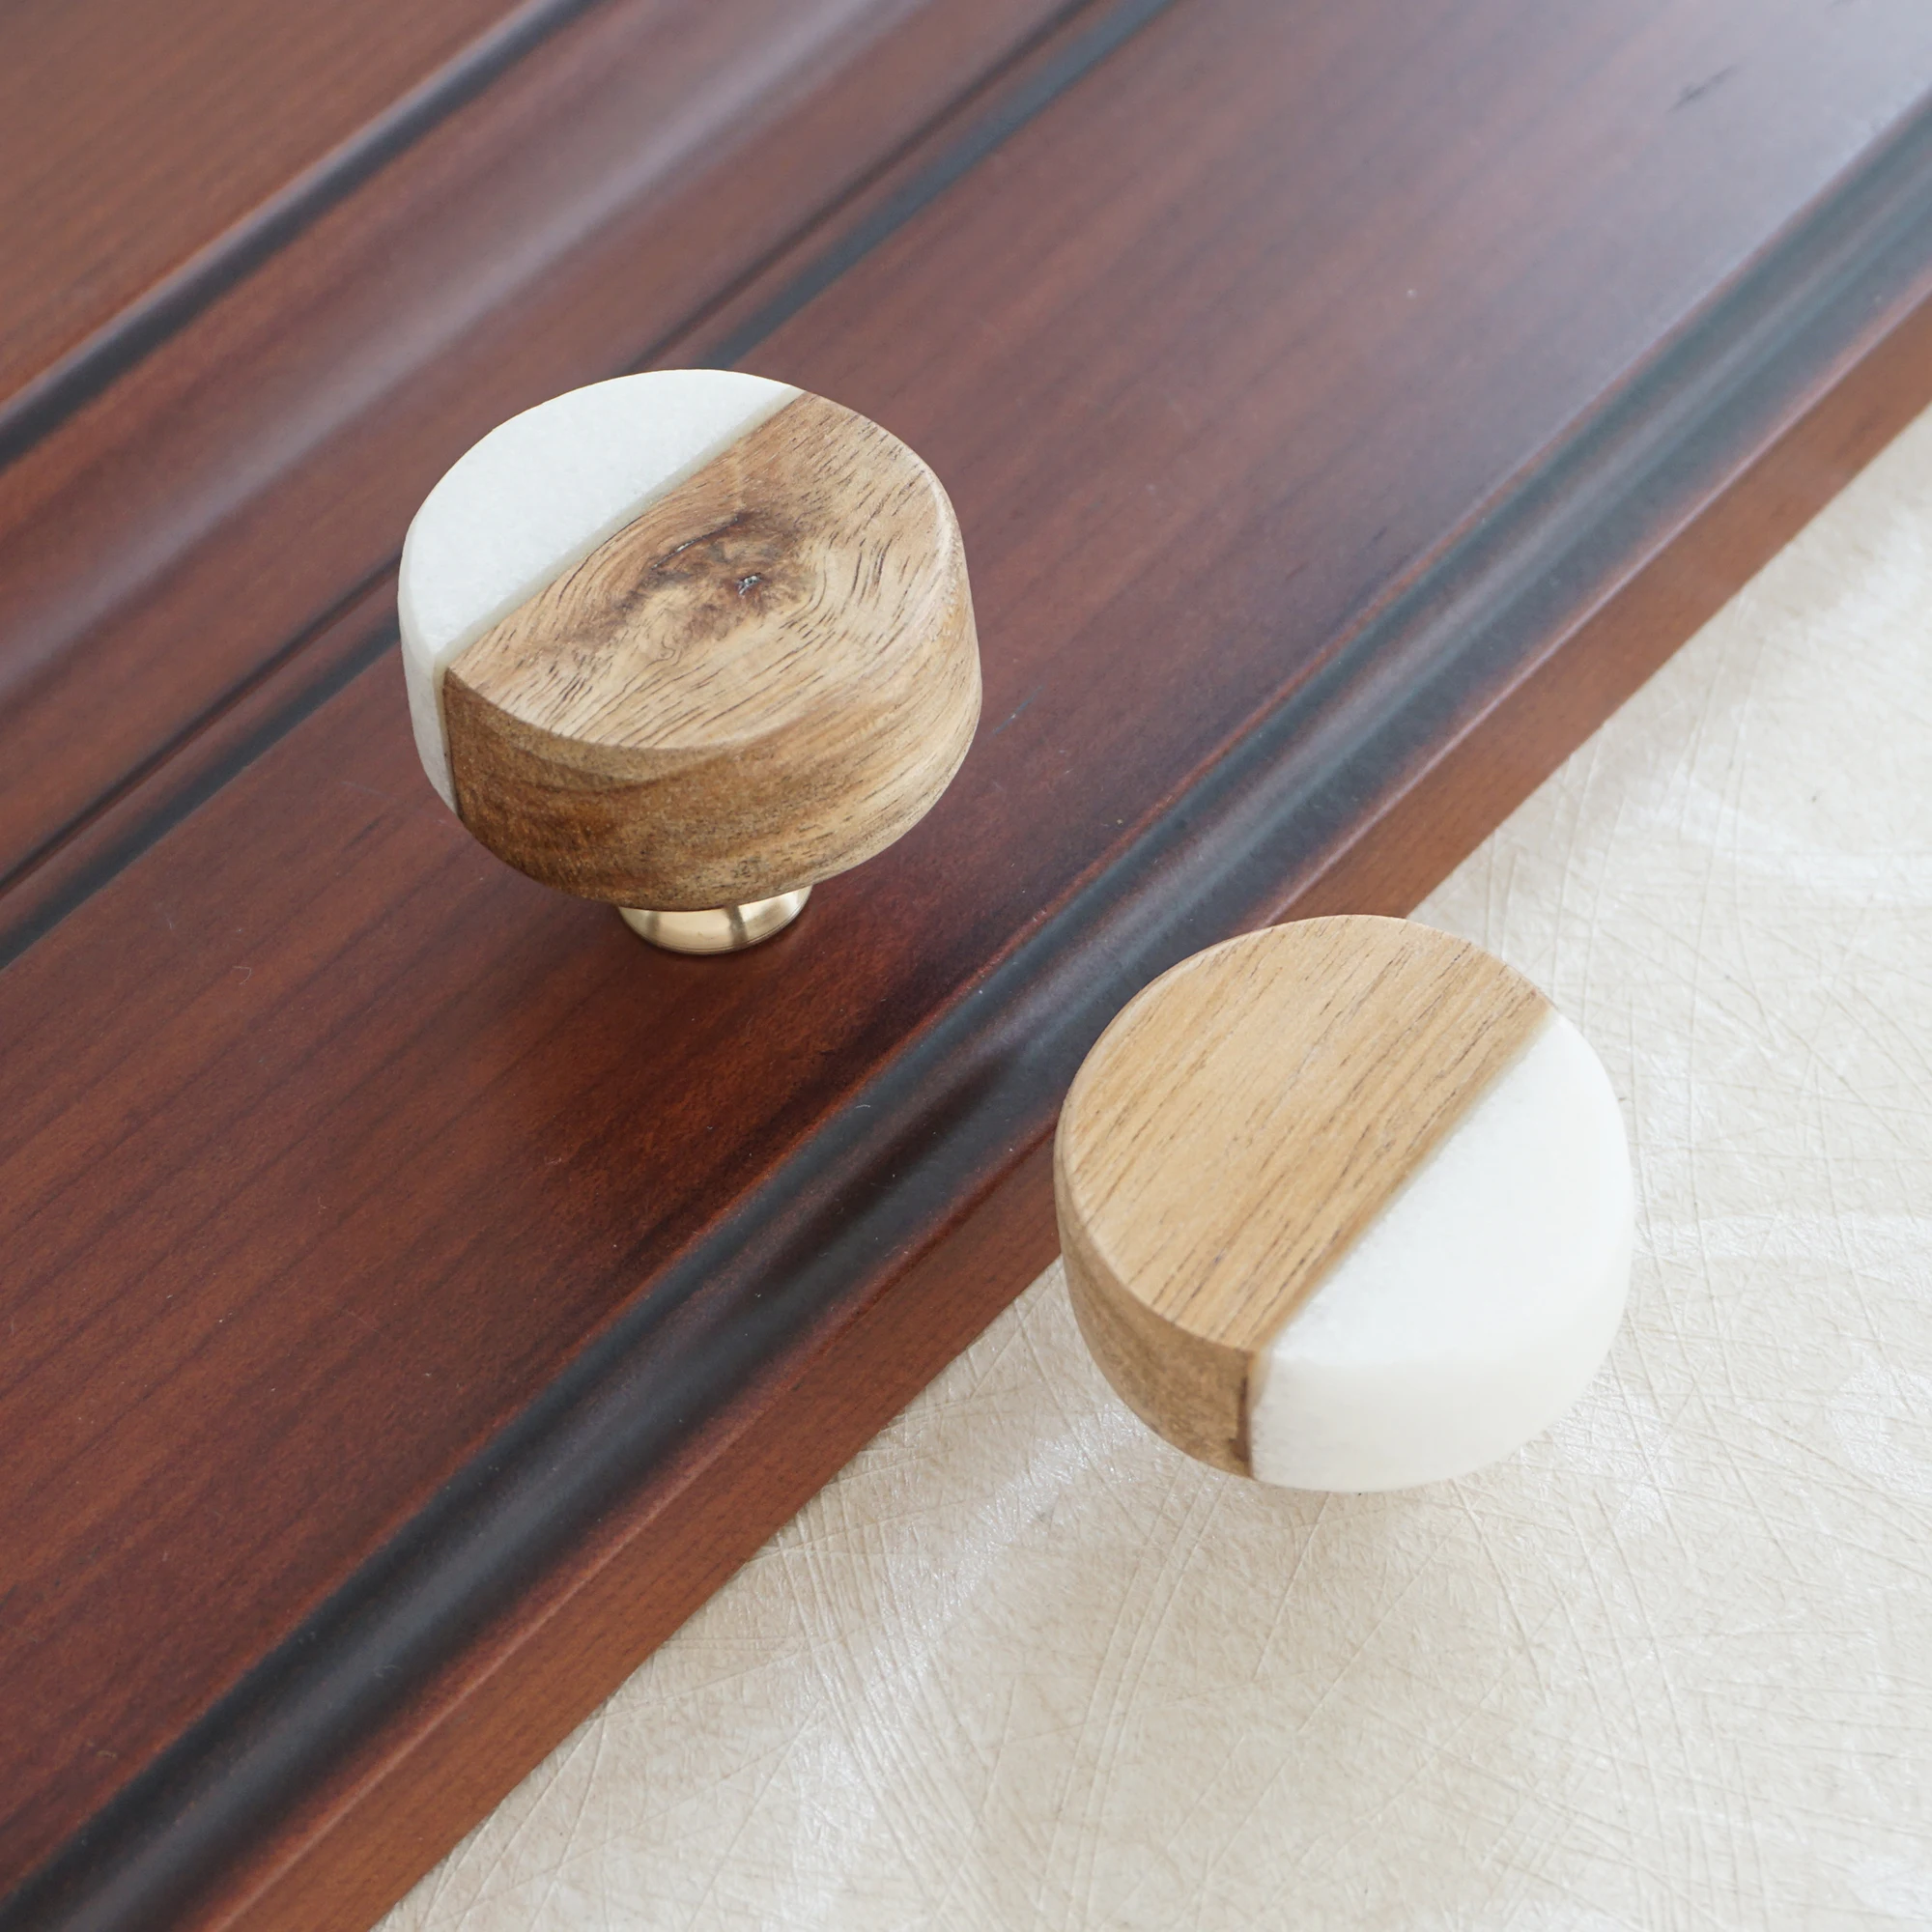 Wooden Cabinet Knob Furniture Hardware Drawer Wood Handles Pull Handle Knobs